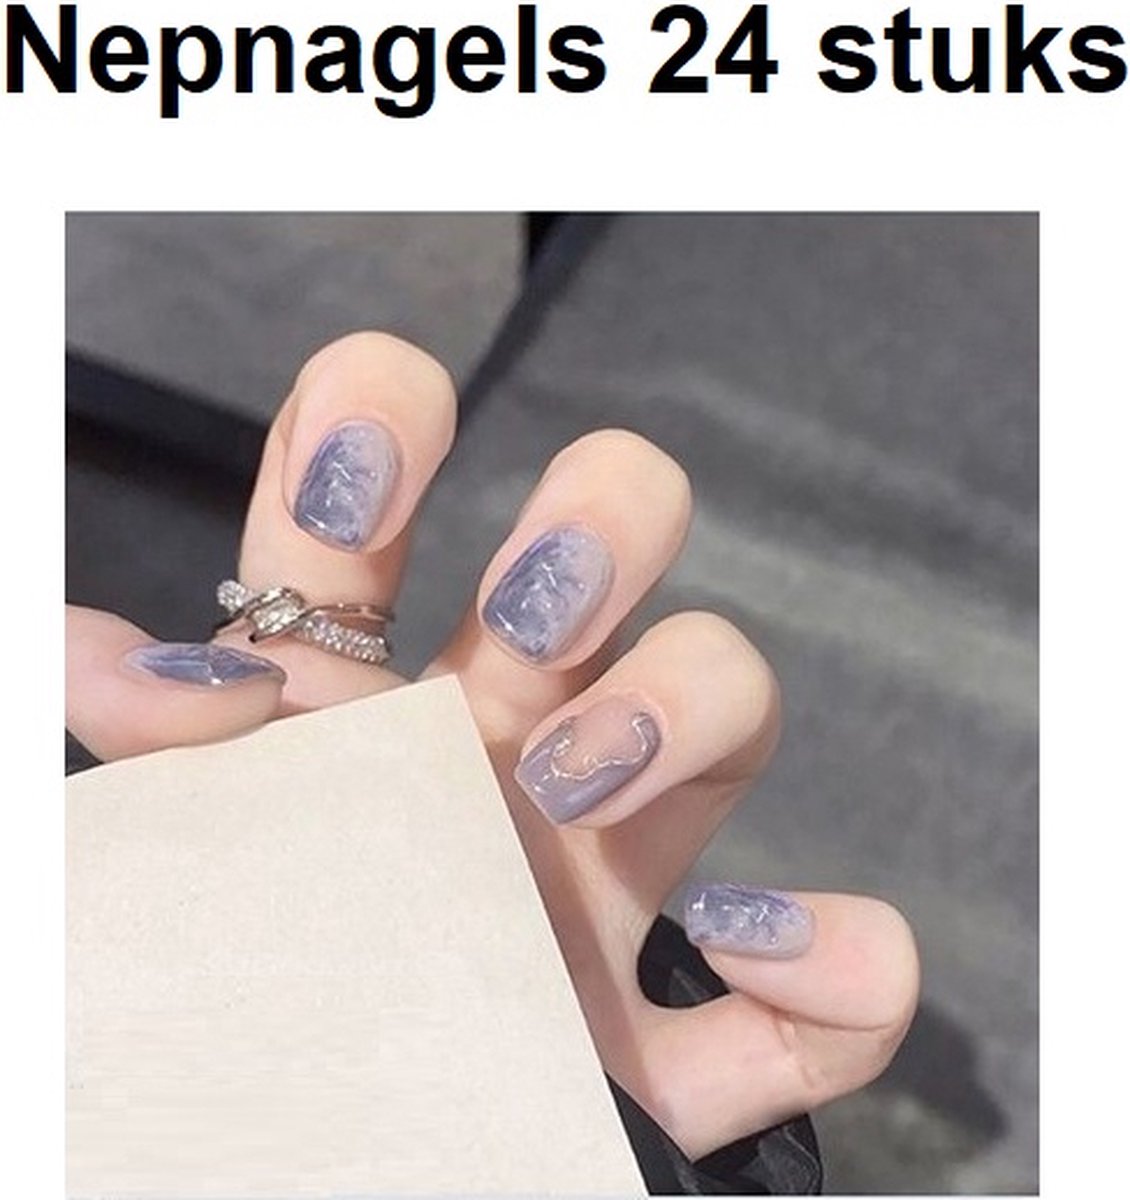 24 Stuks Nepnagels - Kunstnagels Nail Art - Plak Nagels - Multicolor